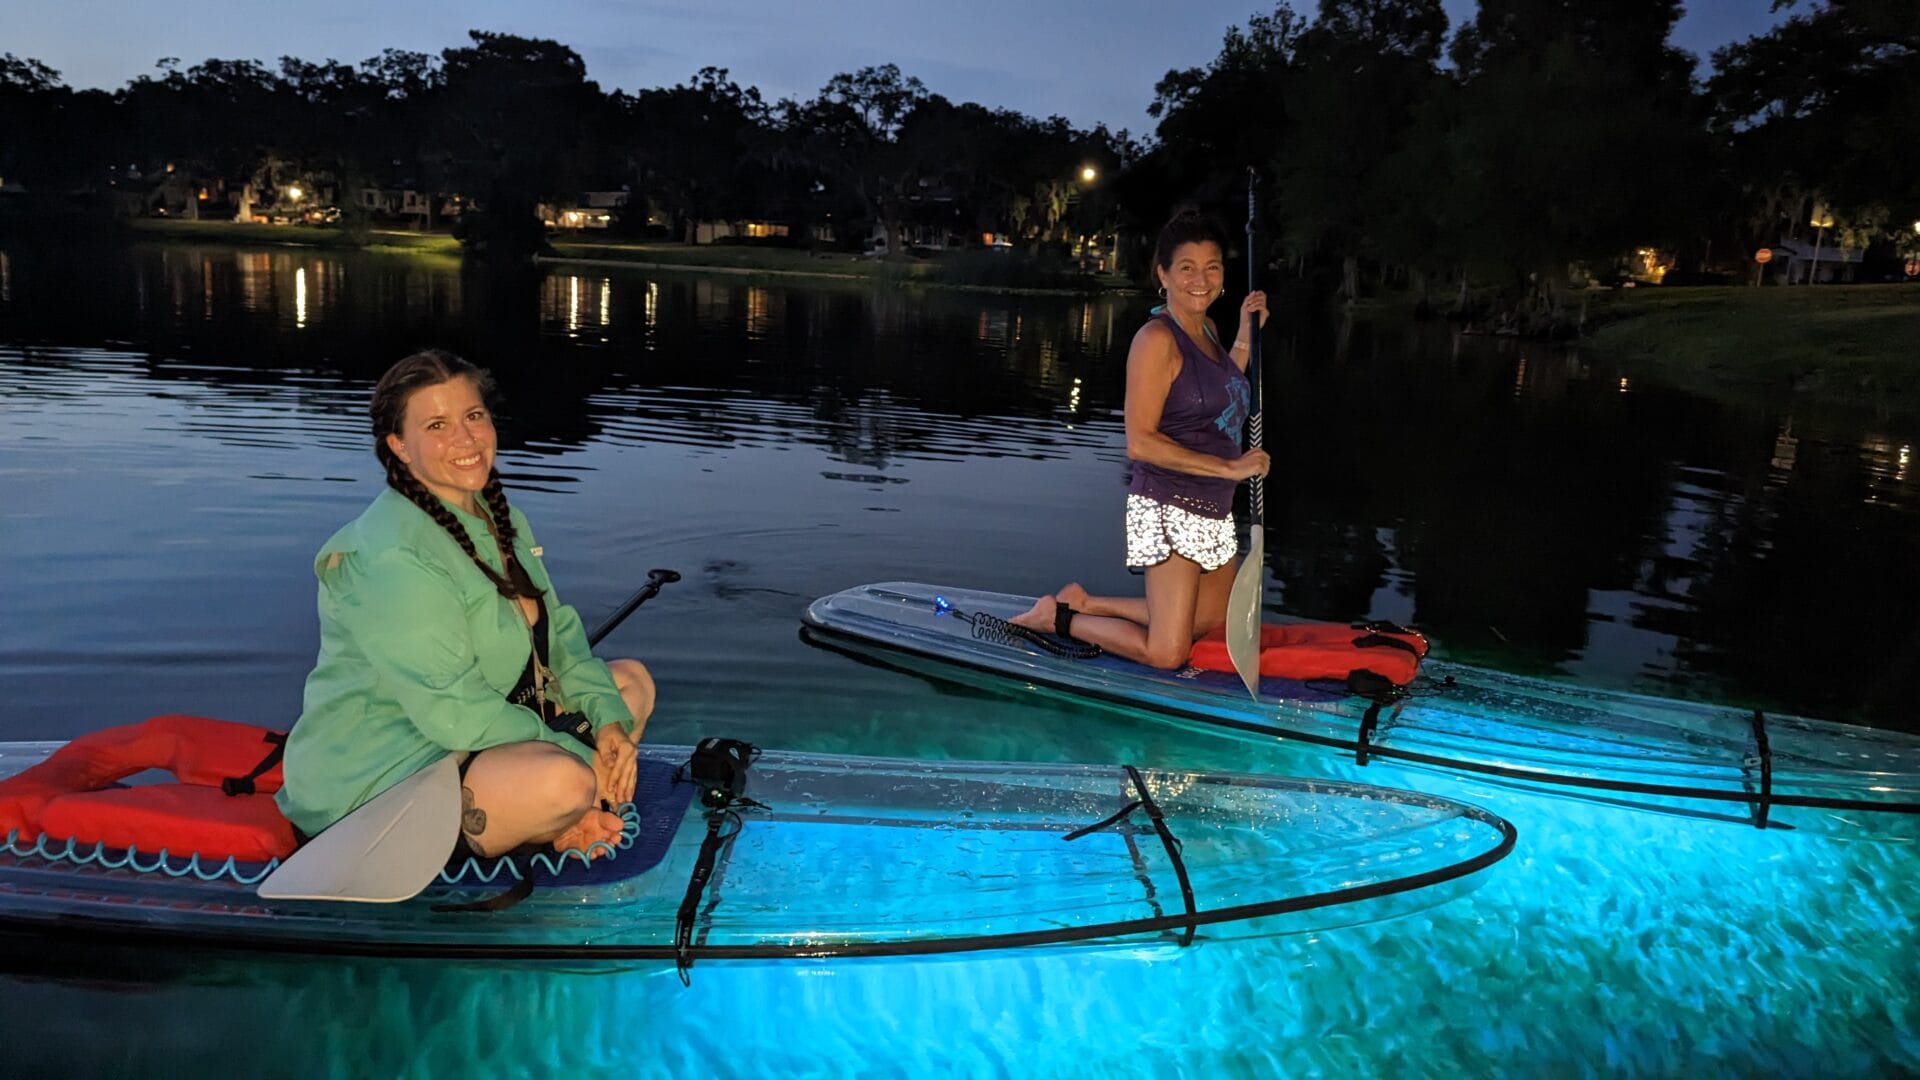 Adventure Set Kayak – Paradise Kids